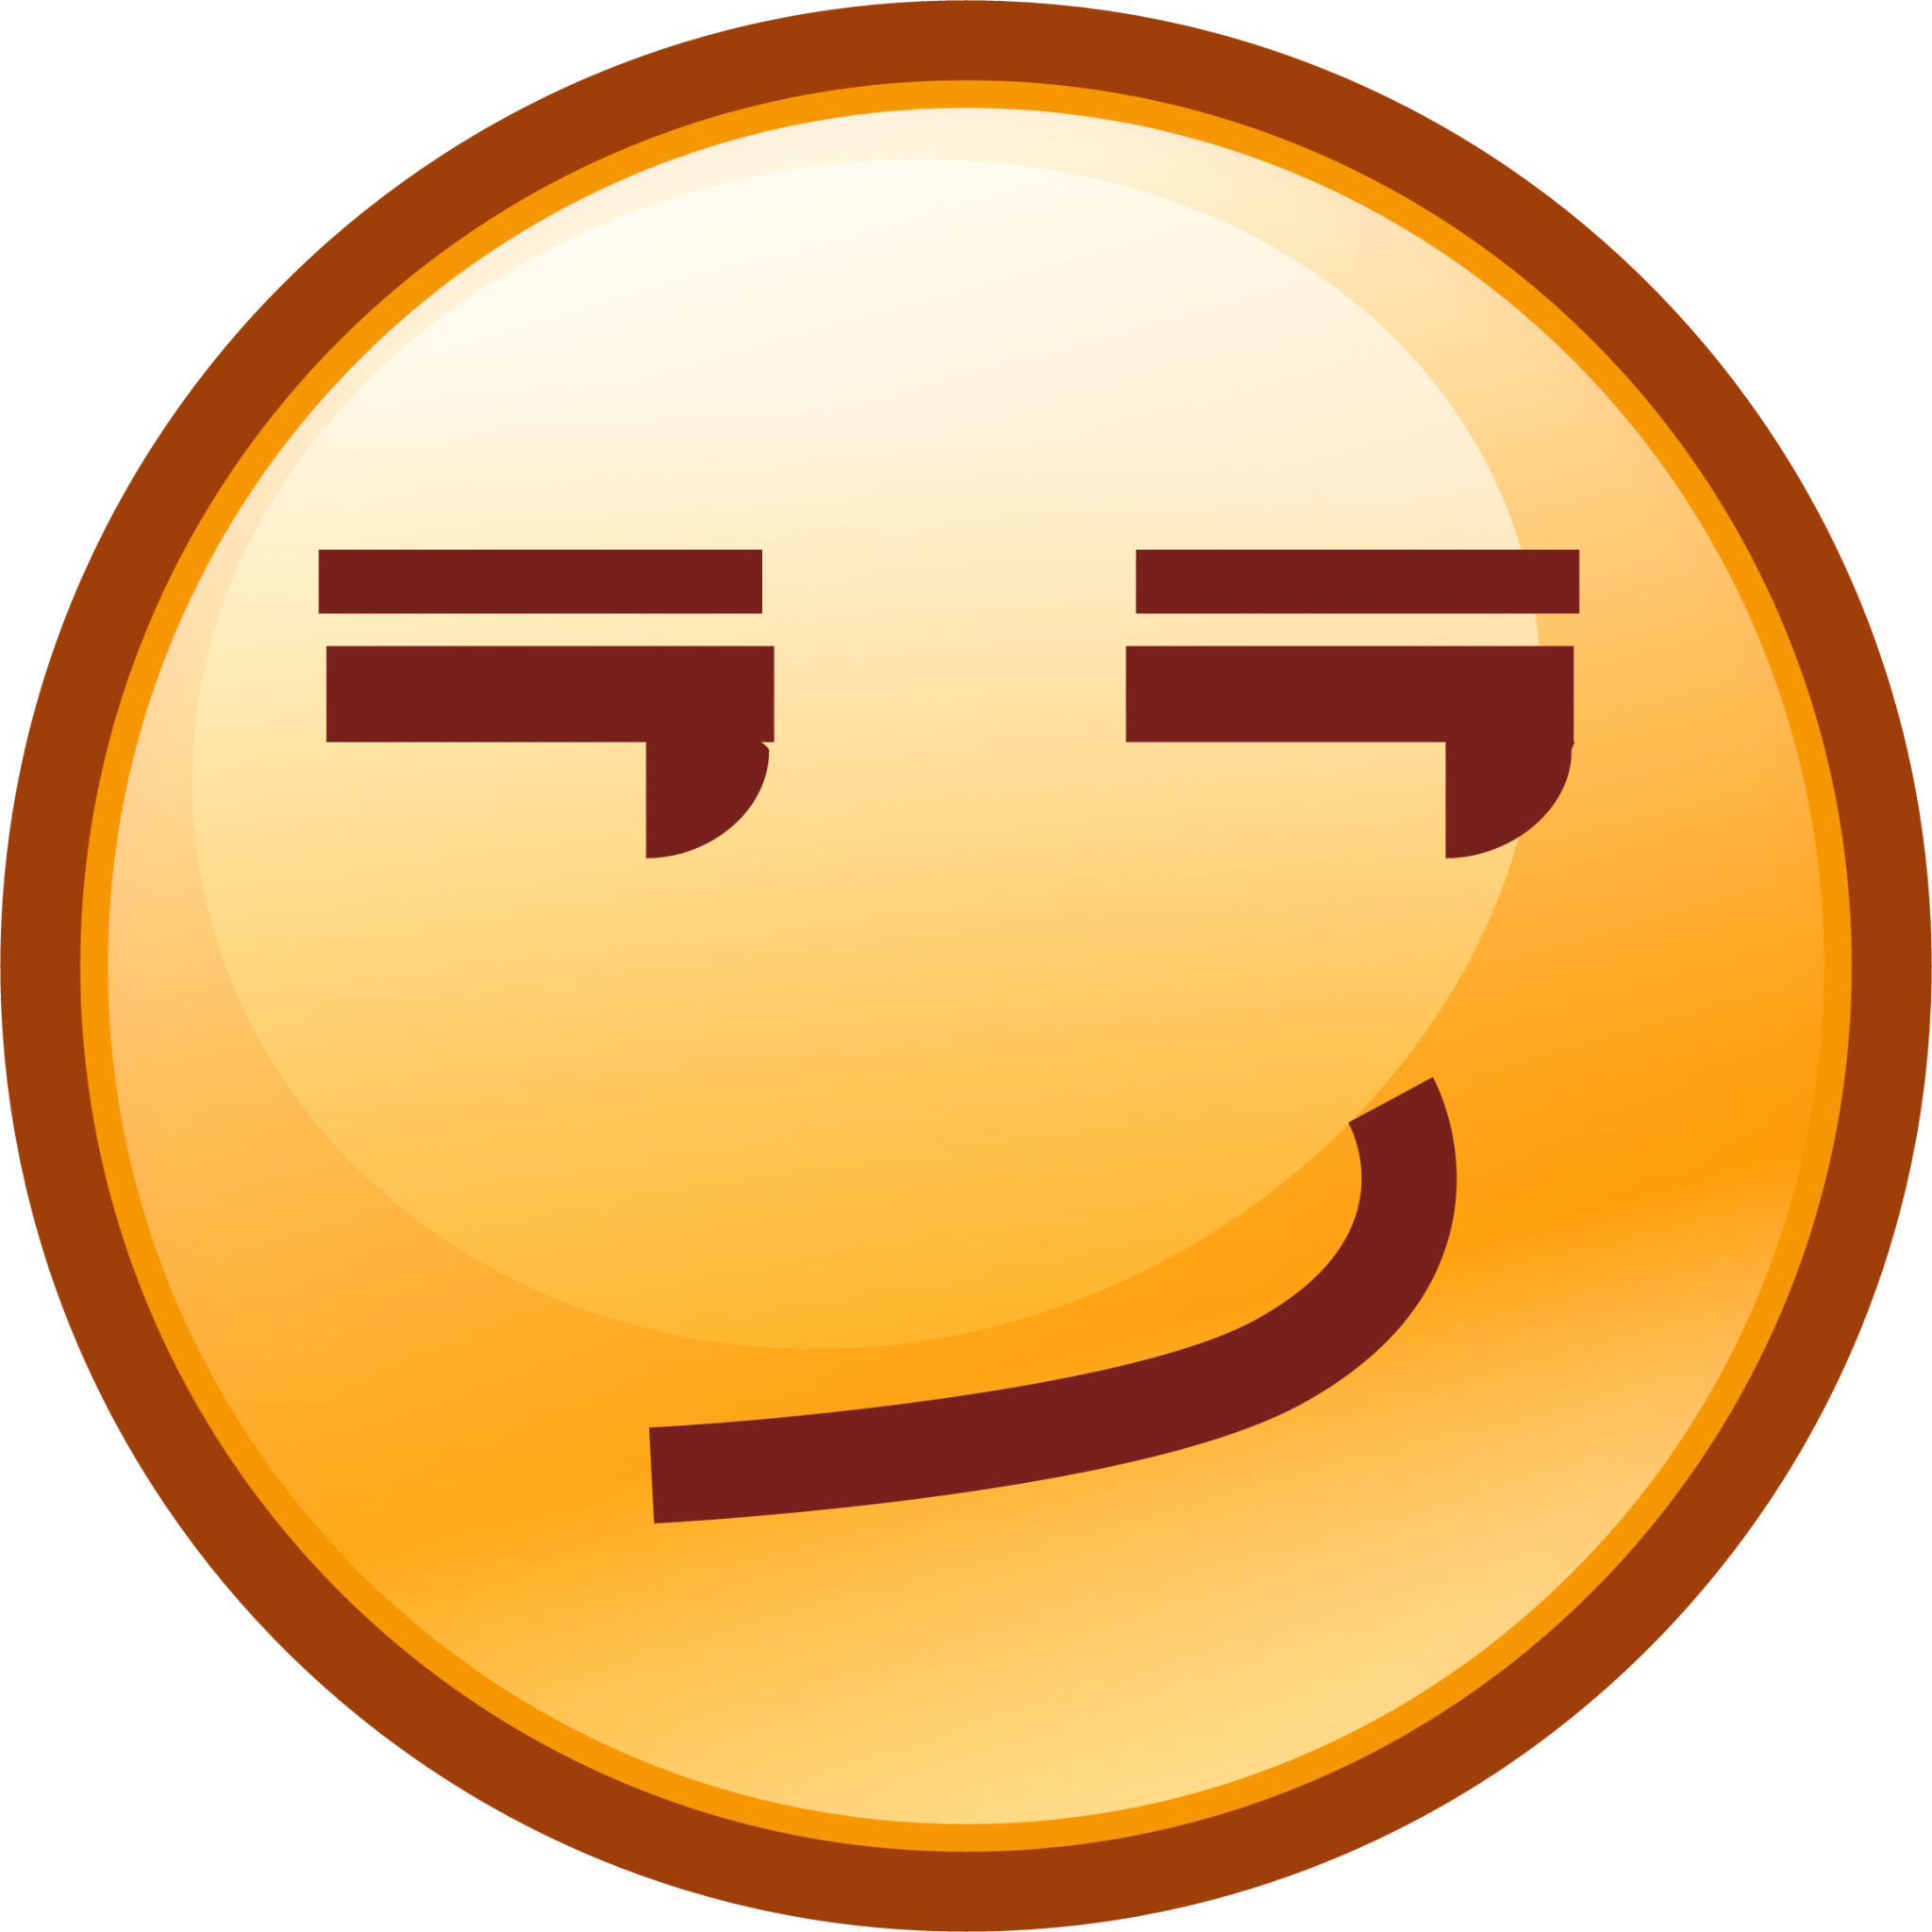 smirk (smiley) emoji